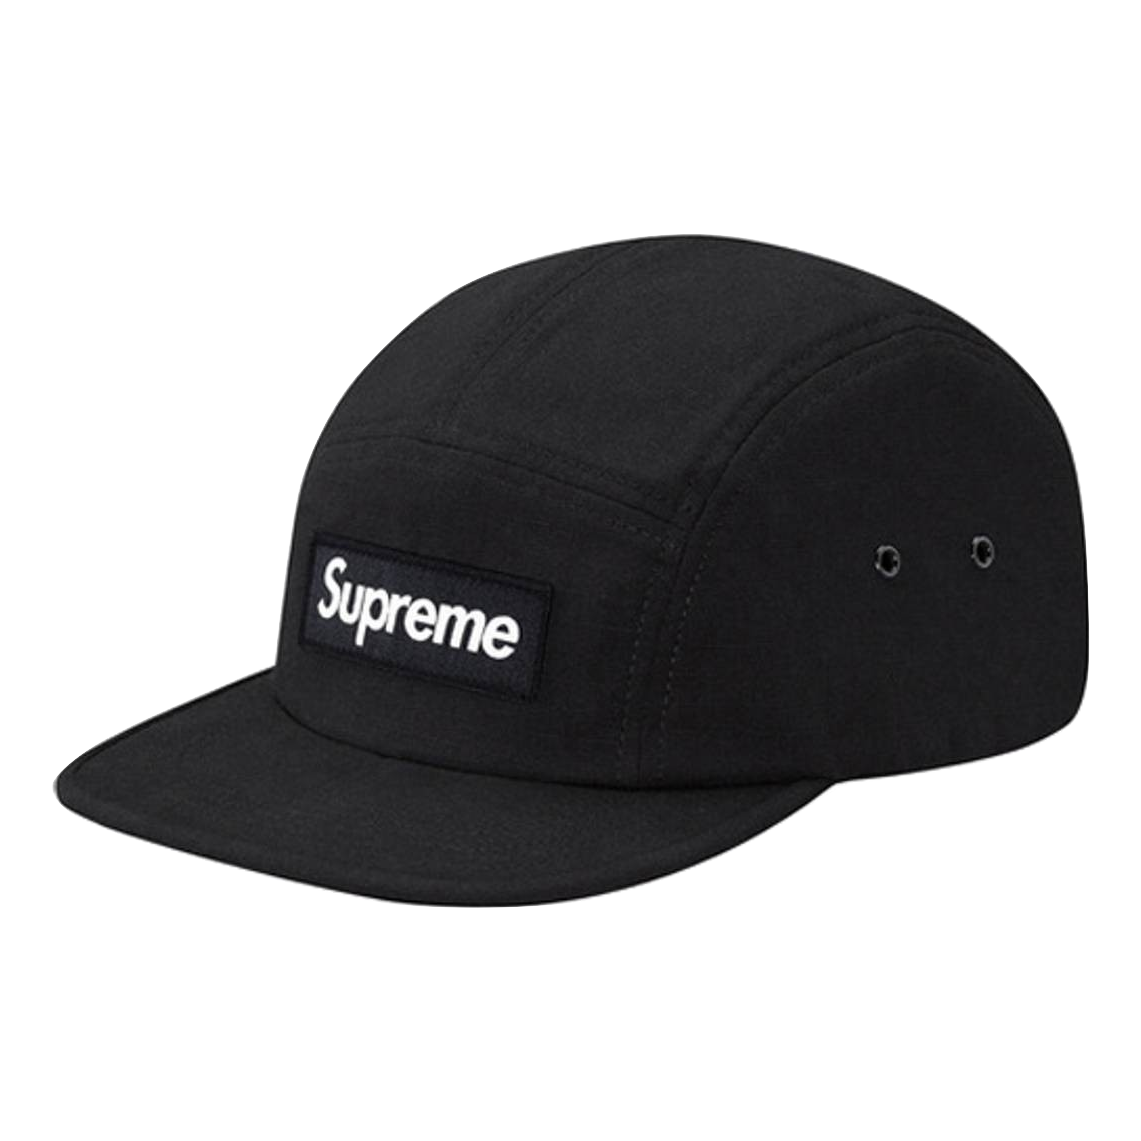 Supreme Box Logo Camp Cap - Black - Used